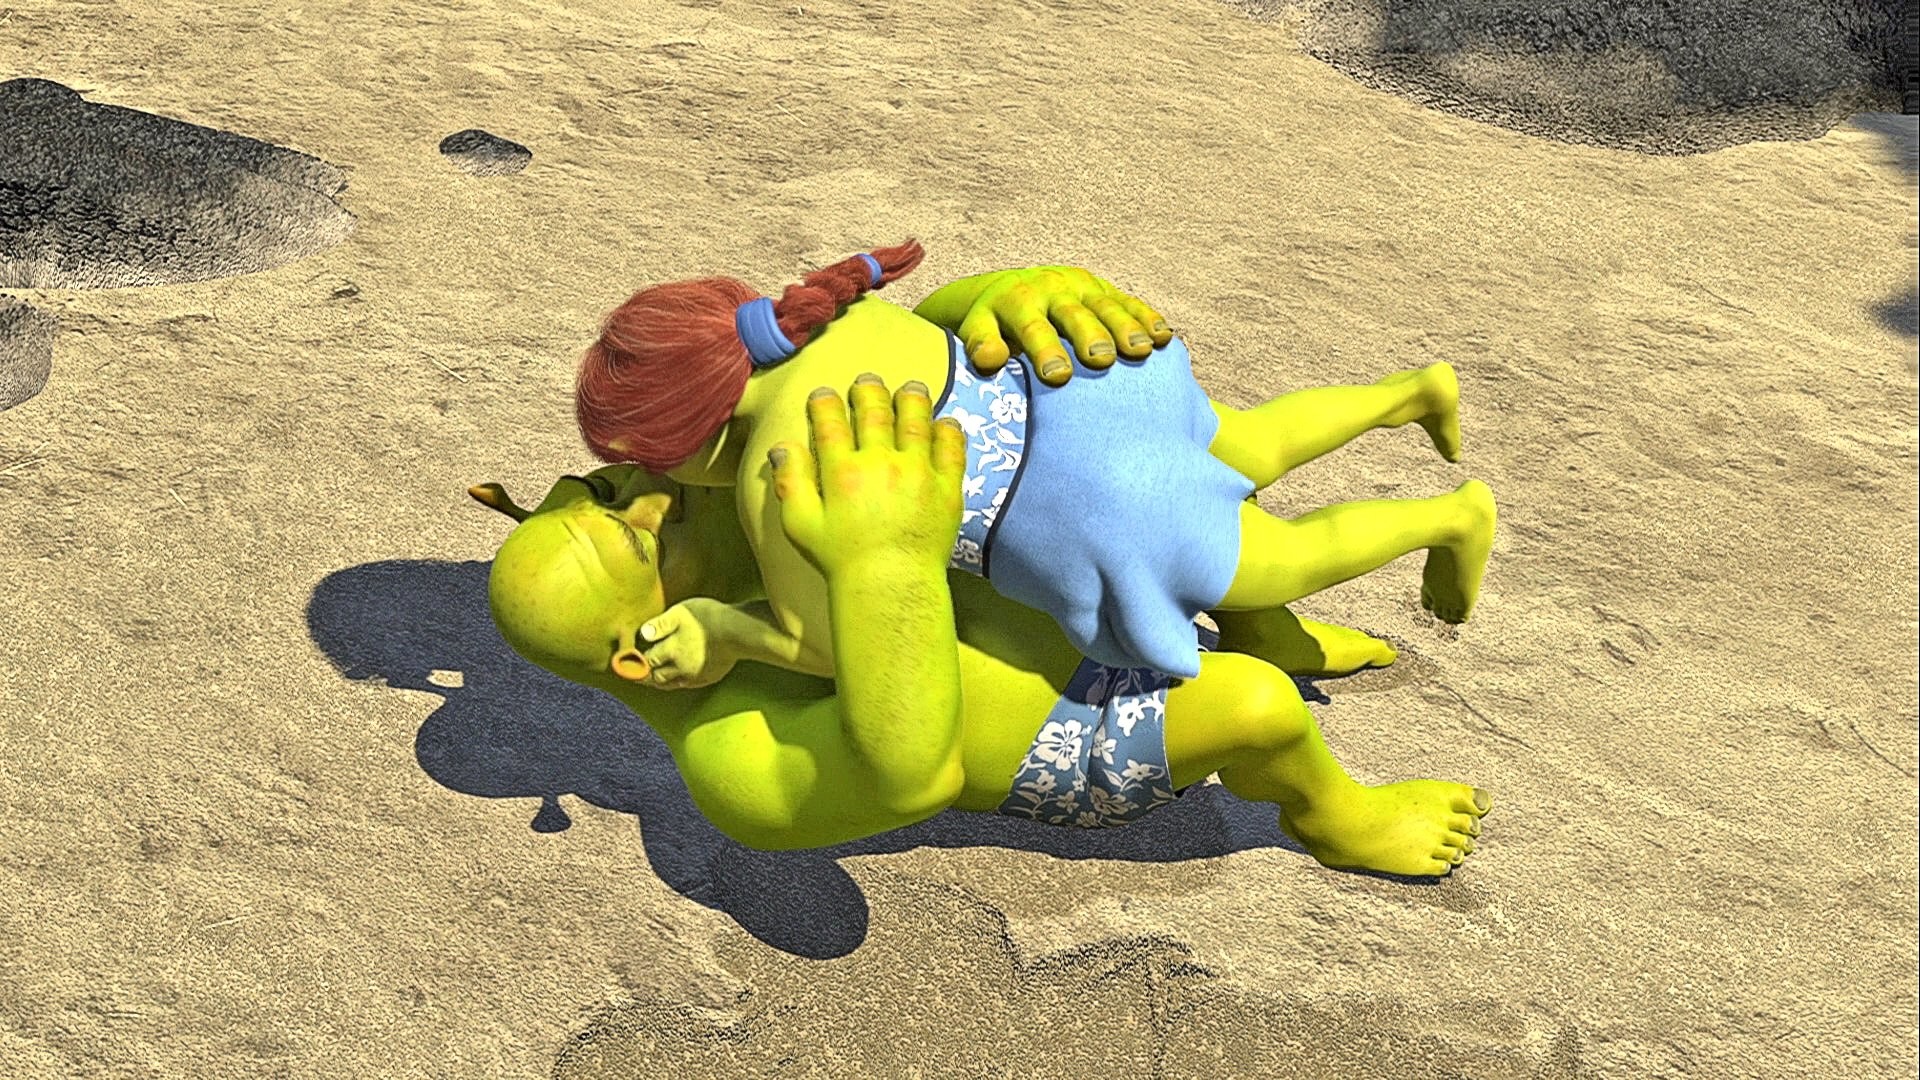 1920x1080 Image - Shrek & Fiona lying down kiss.jpg WikiShrek FANDOM po...